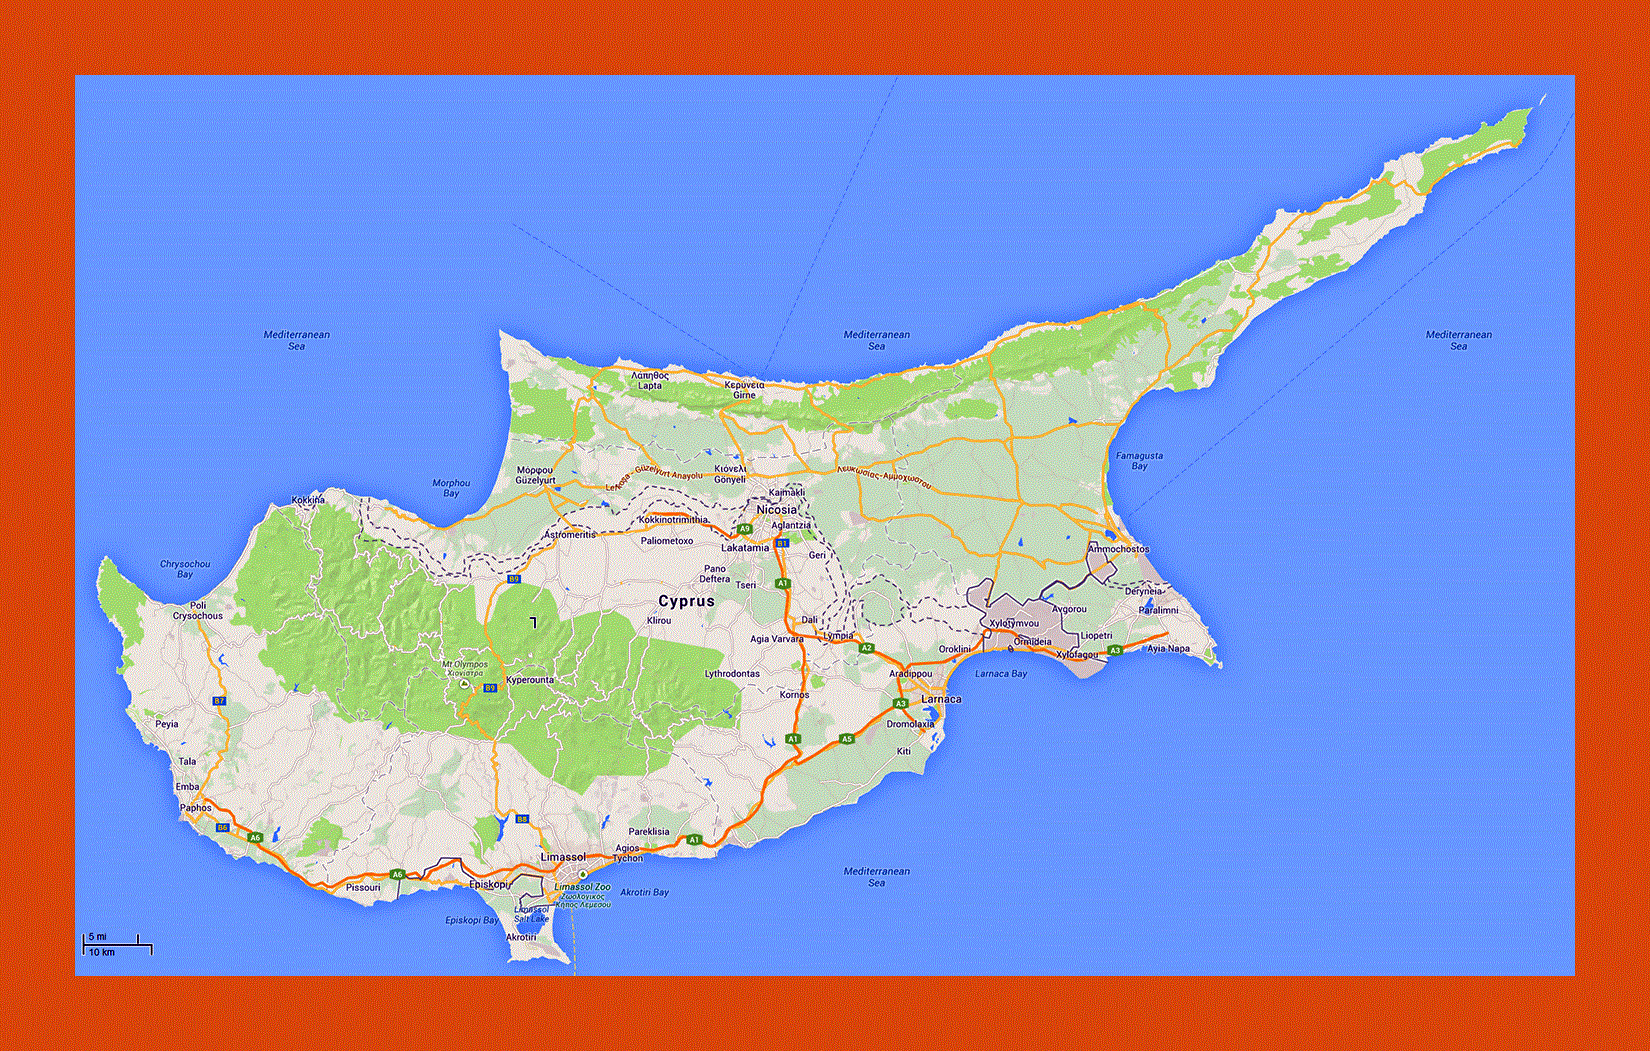 Кипр какая страна. Остров Кипр на карте. Протарас на карте Кипра. Остров Кипр на карте мира. Кипр расположение острова.